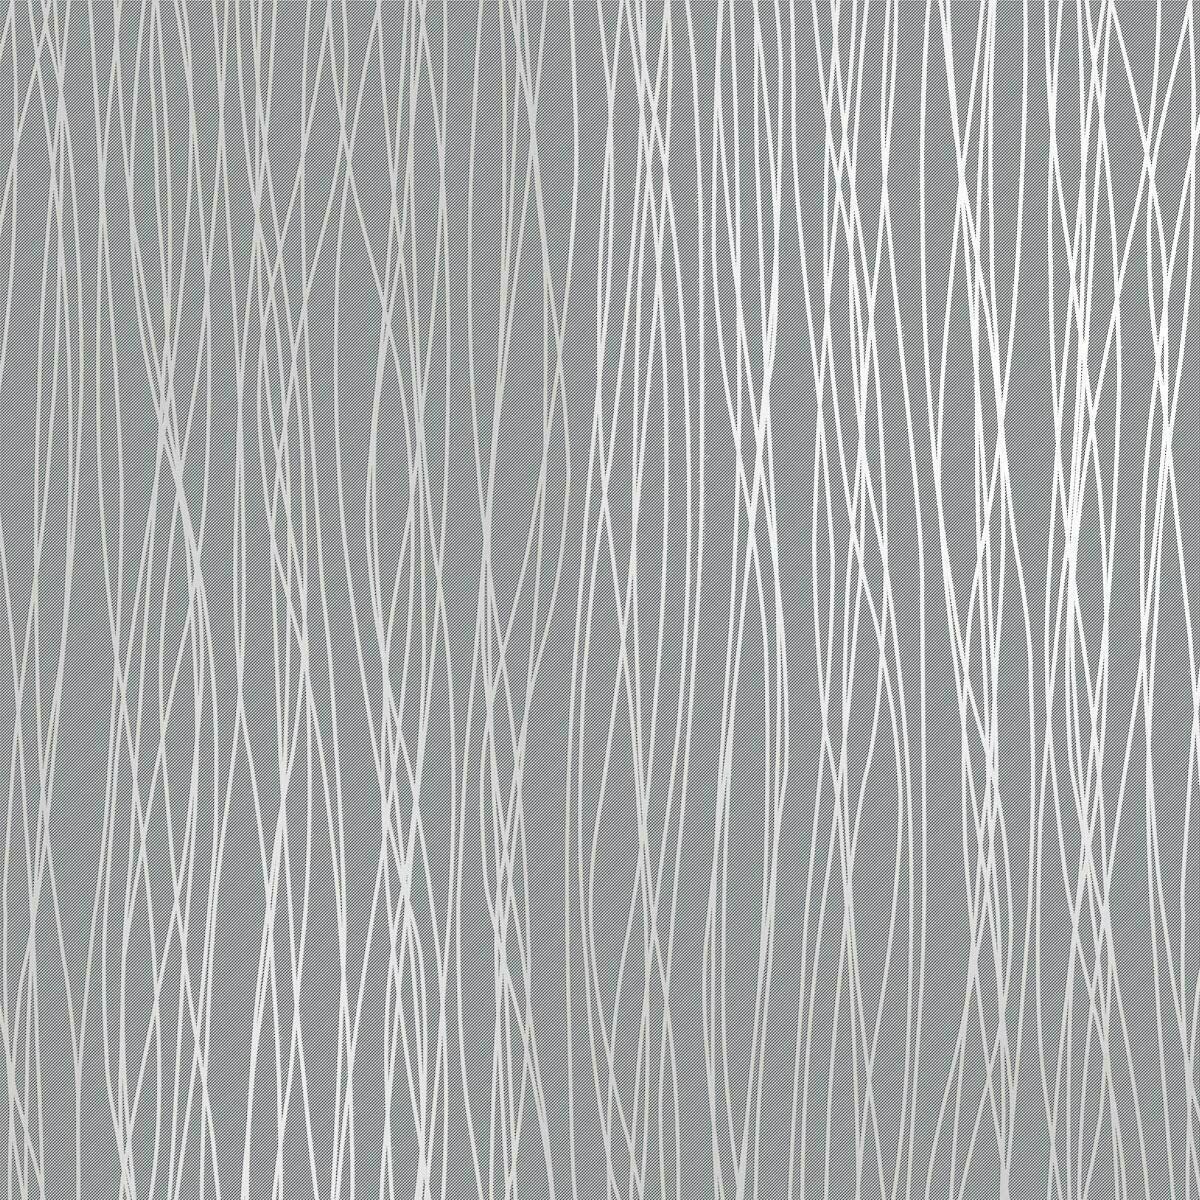 Mavee Non-Woven Embossed Stripe Wallpaper 53cm x 10m - $19.79